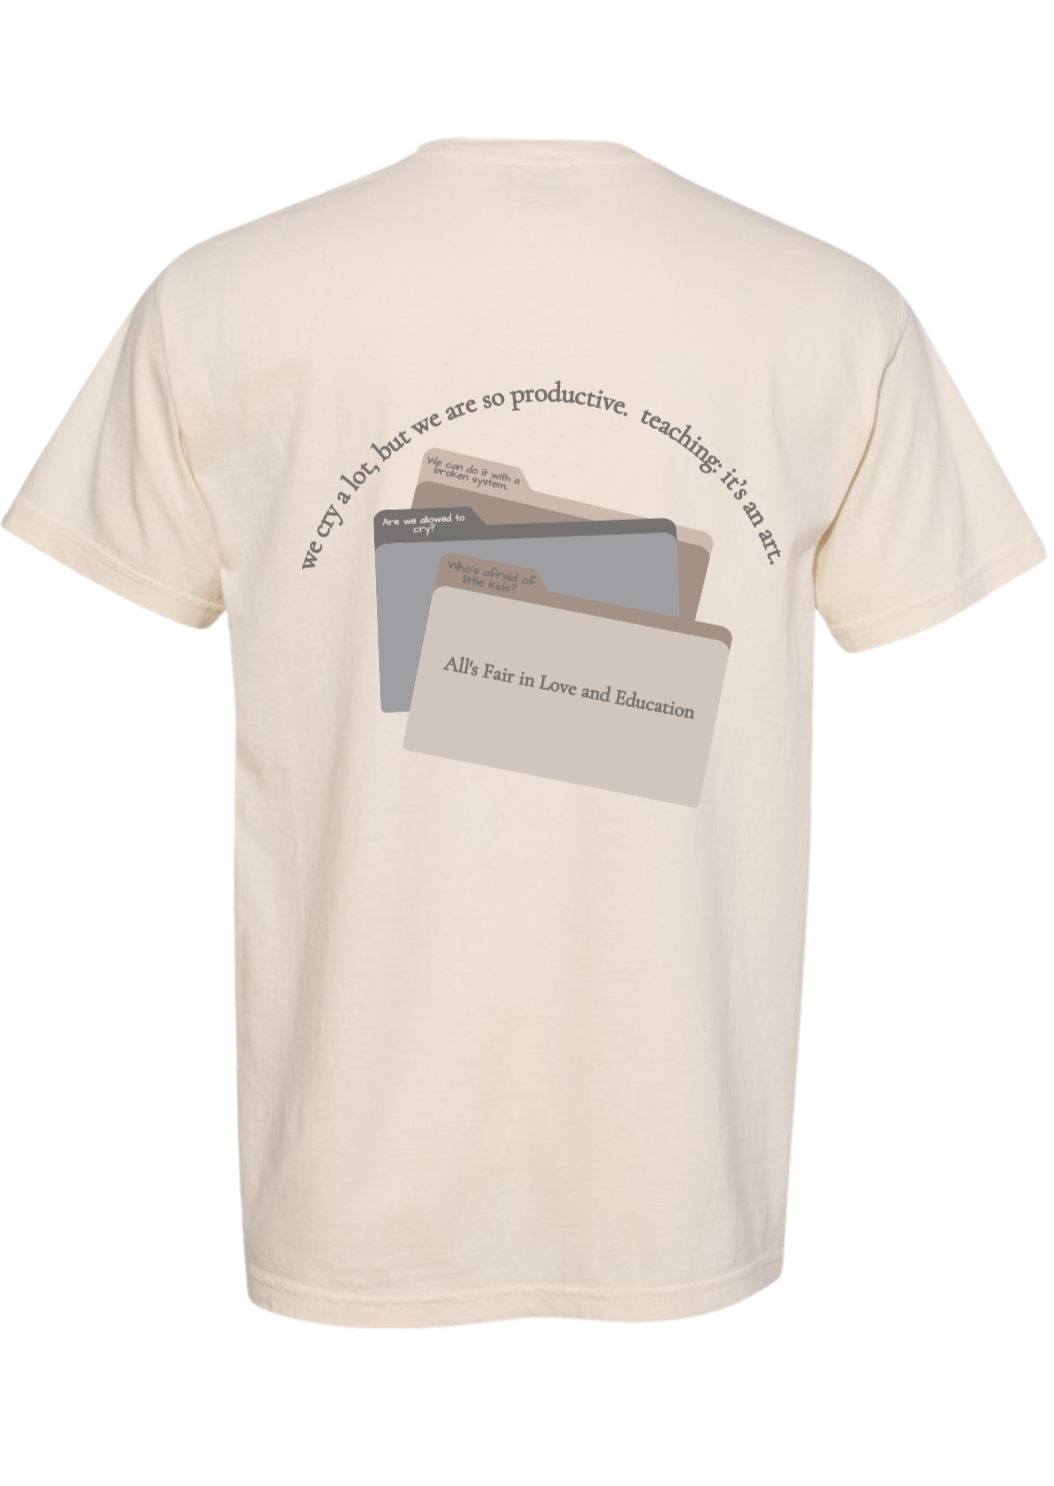 the tired teachers department t-shirt (files)